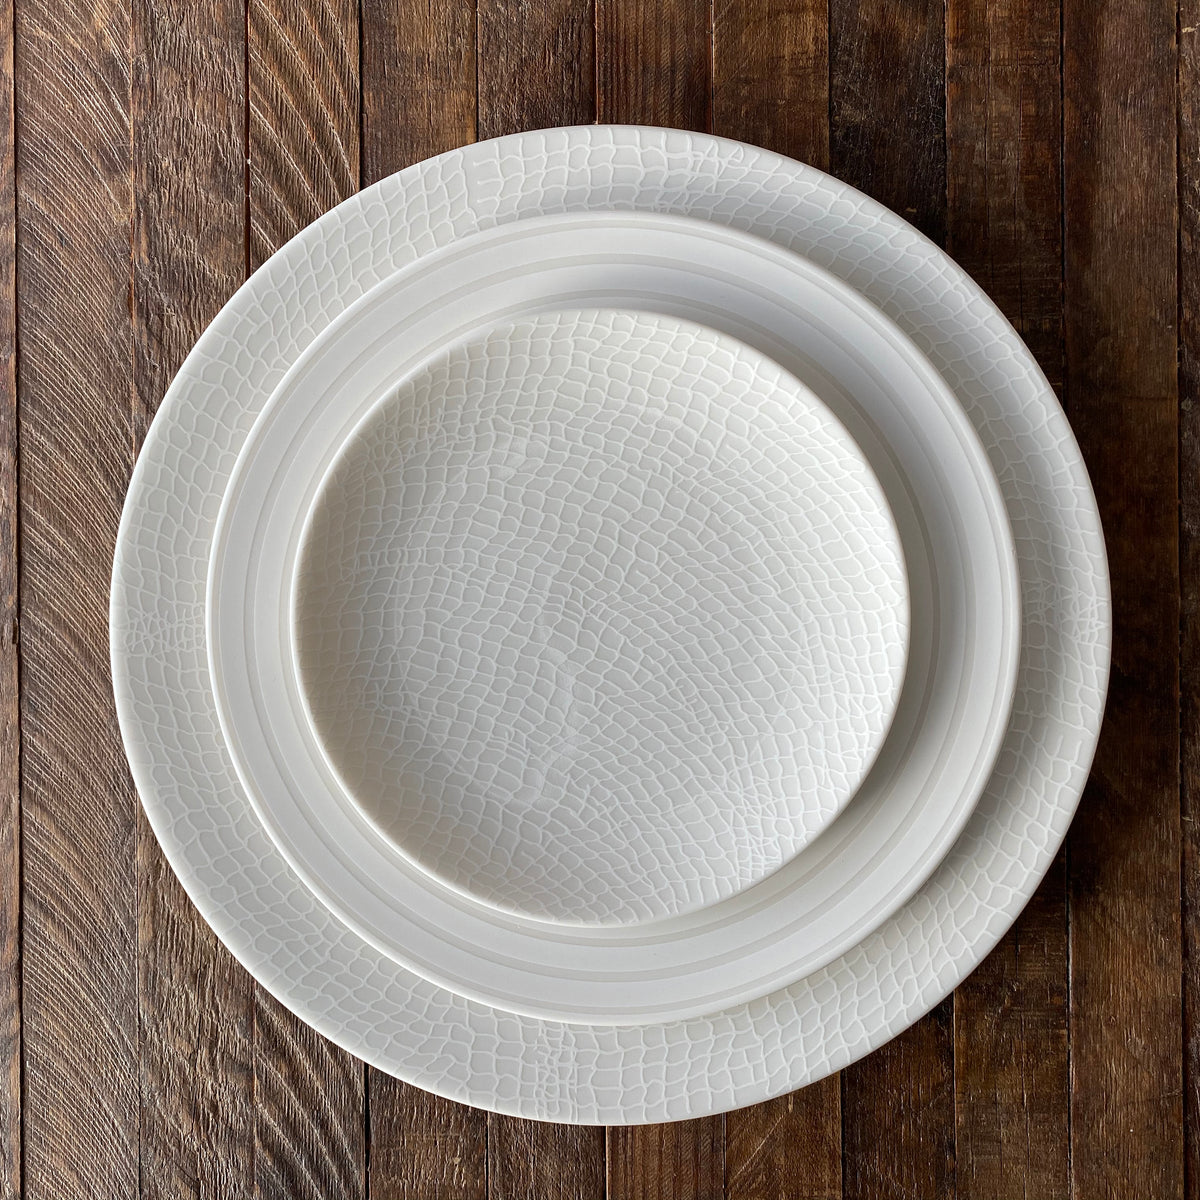 A Caskata Artisanal Home premium porcelain rimmed Cambridge Stripe Salad Plate, sitting on a wooden table.